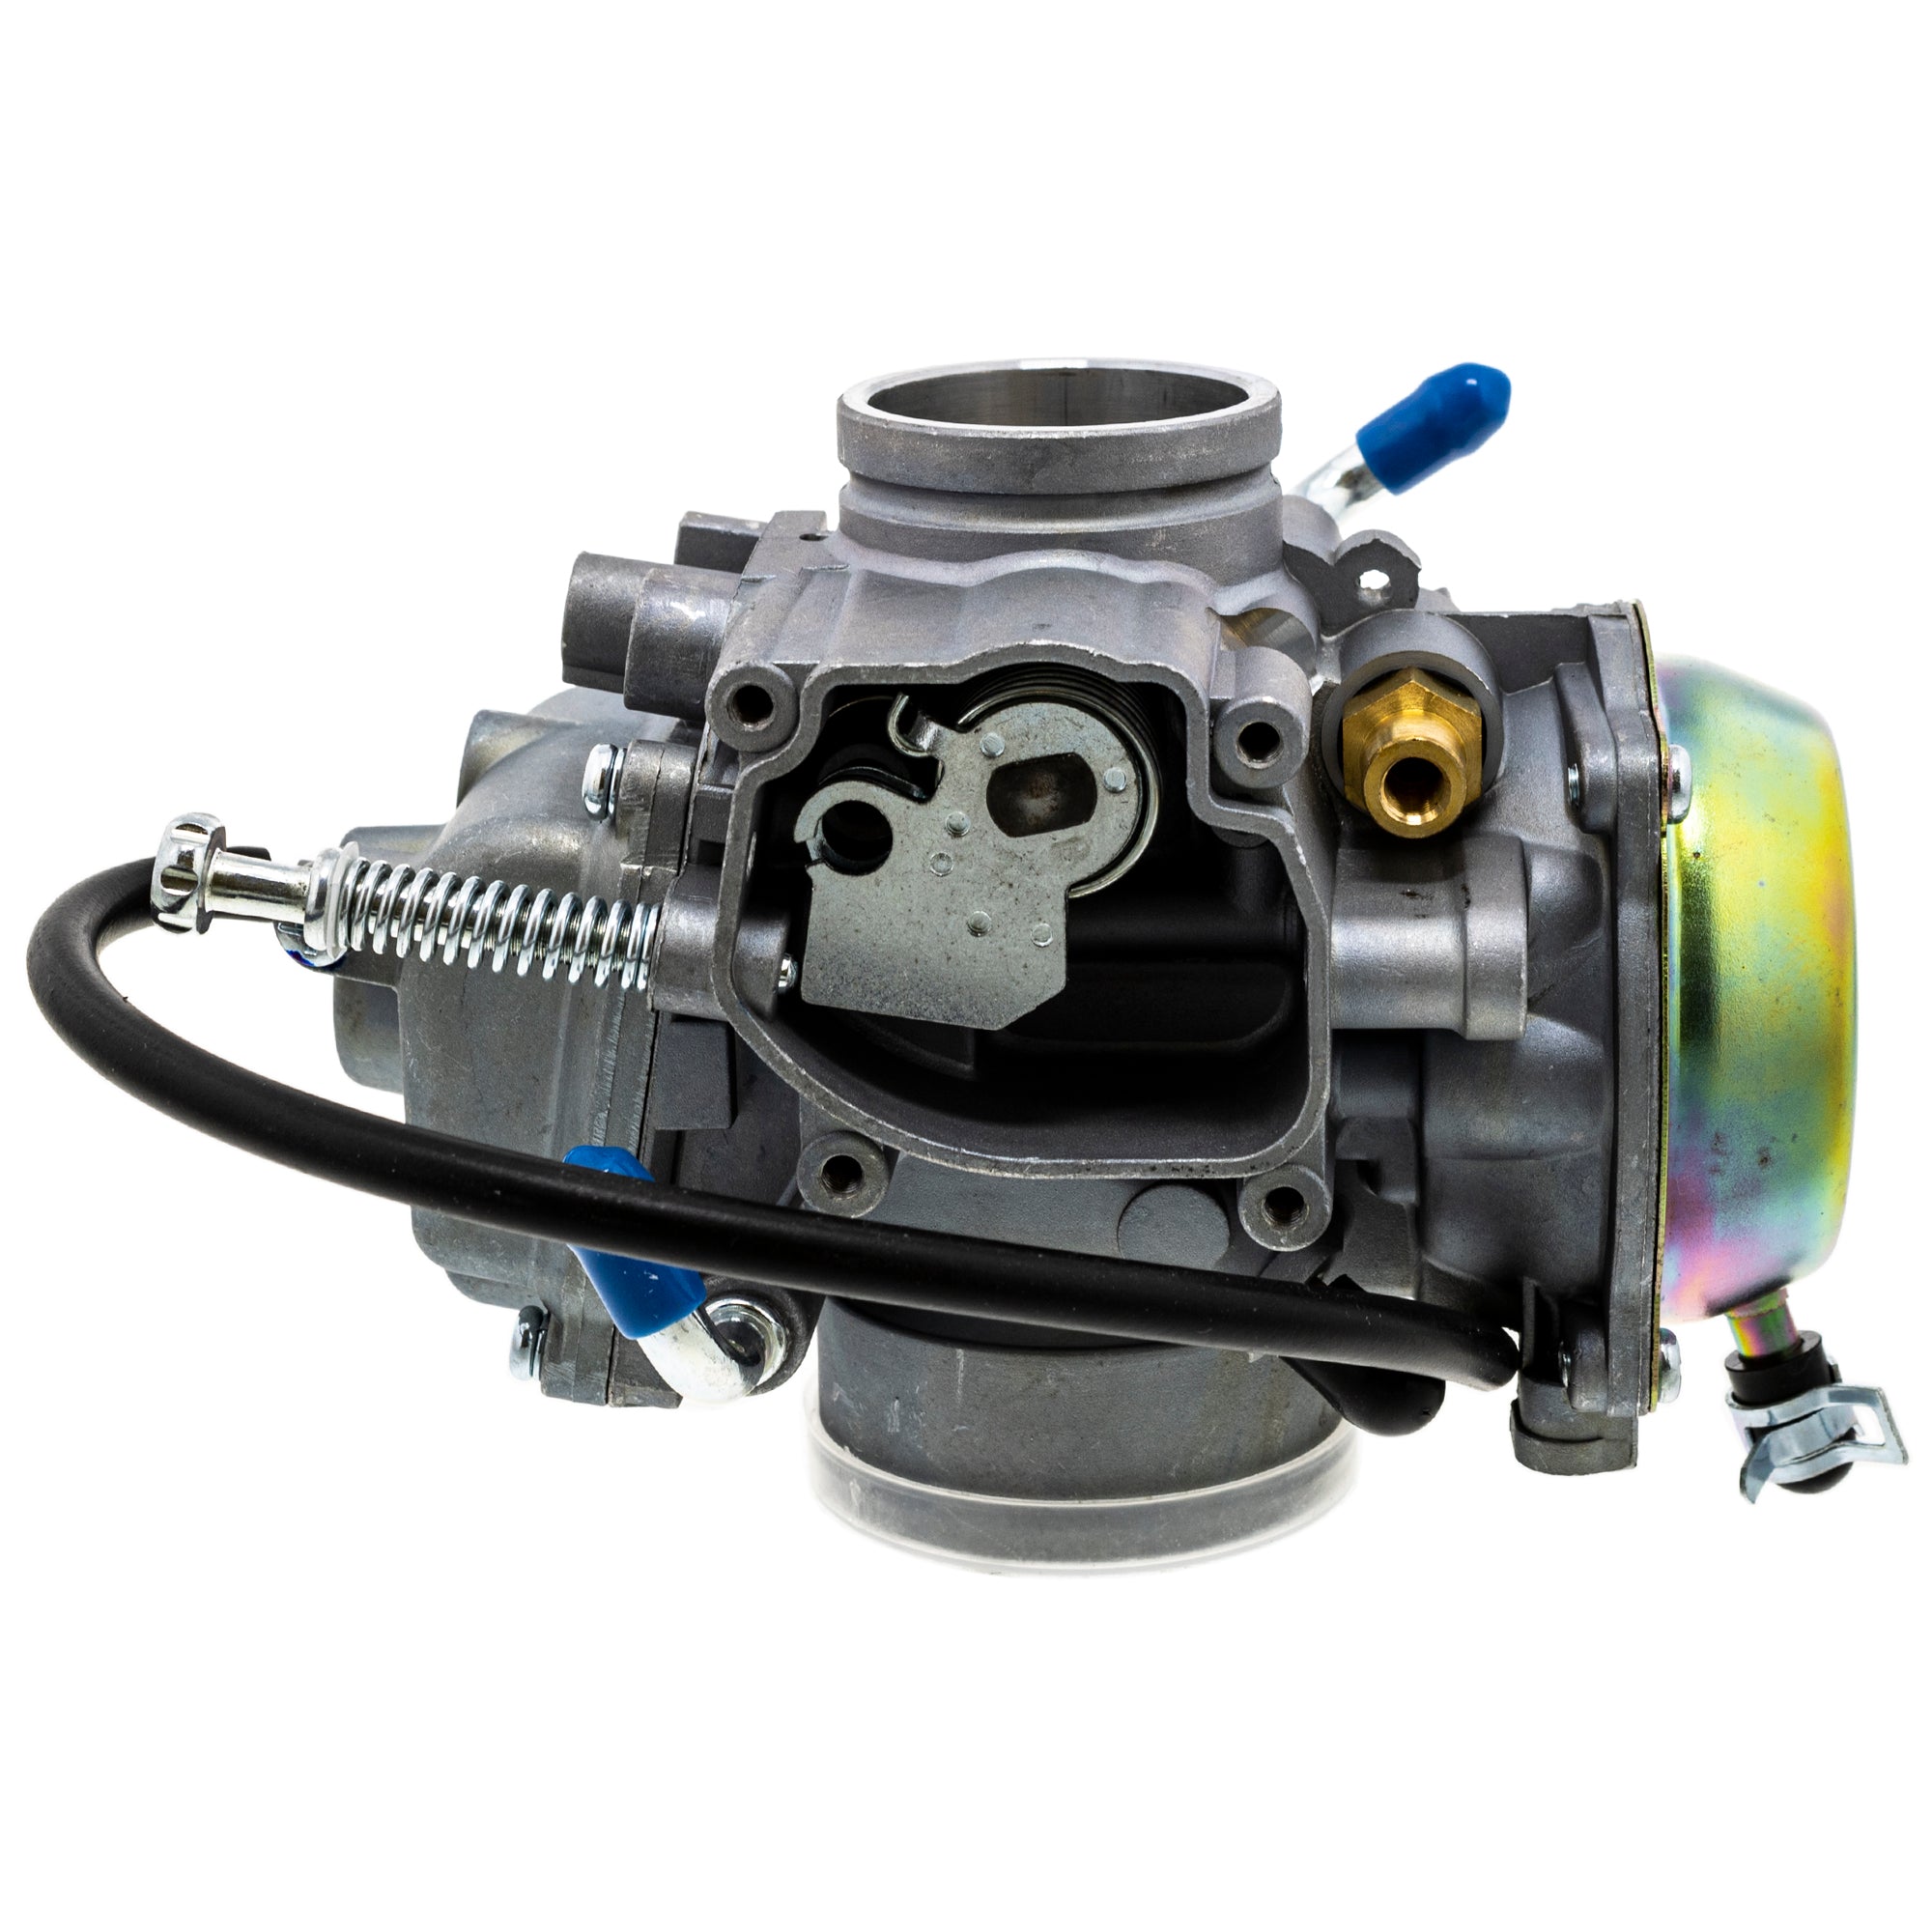 Carburetor and Fuel Pump Kit for Polaris Sportsman 500 400 450 335 700